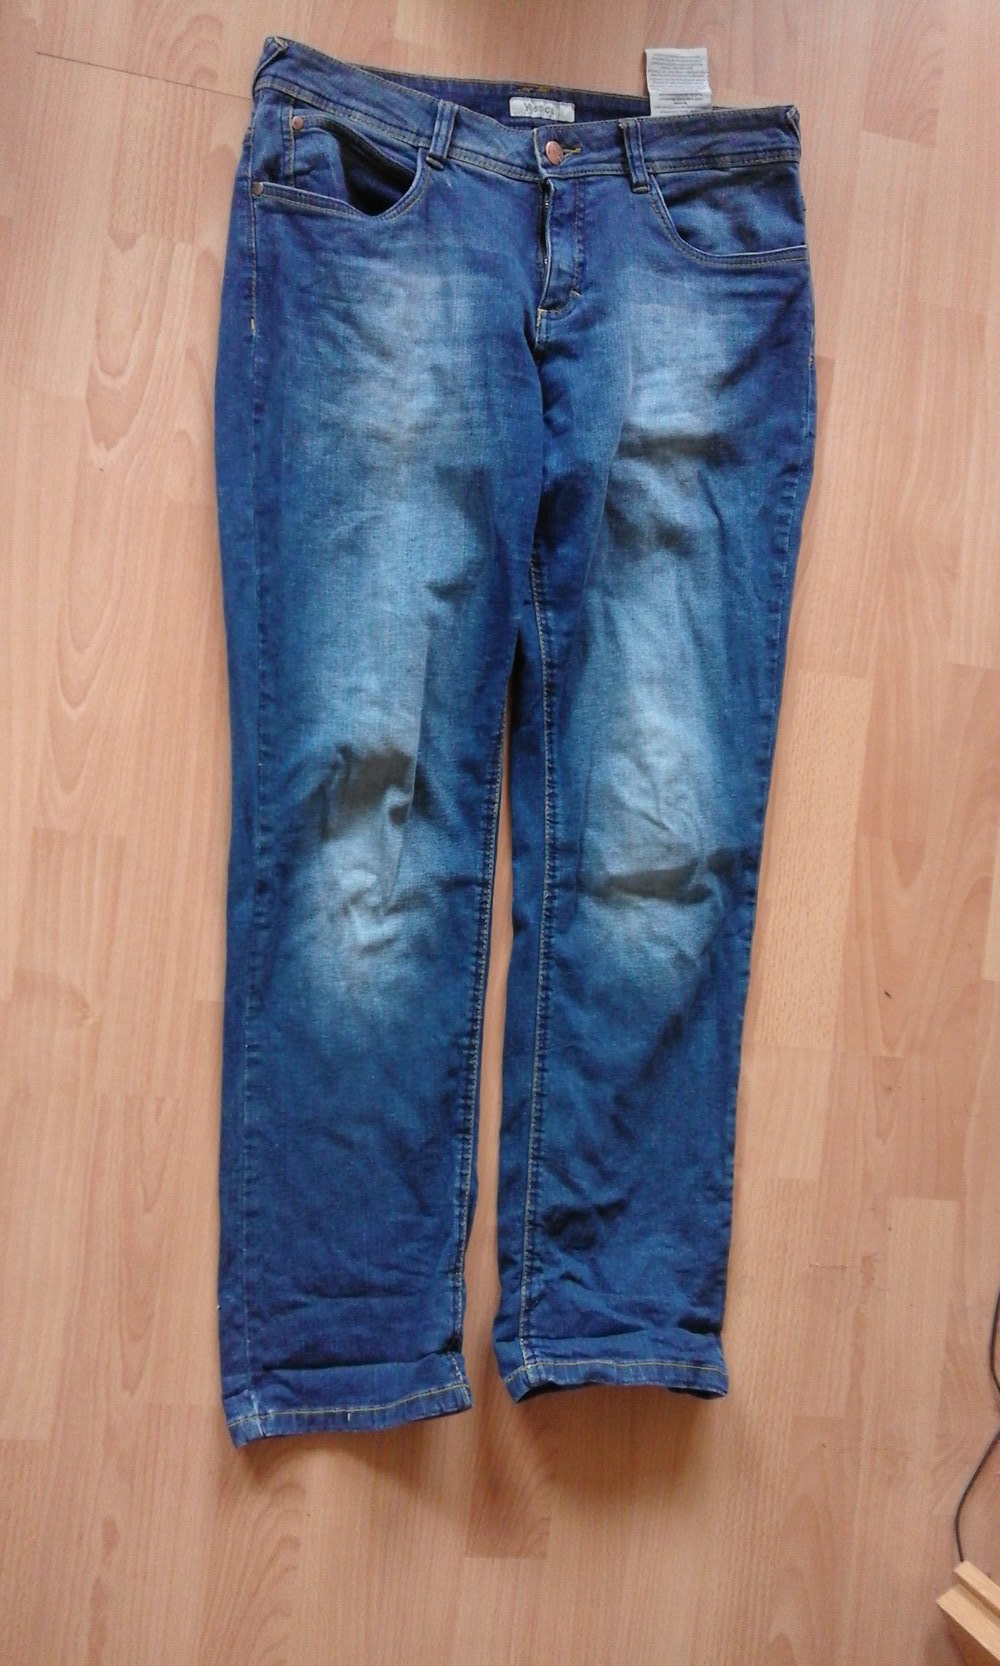 Blue Jeans 